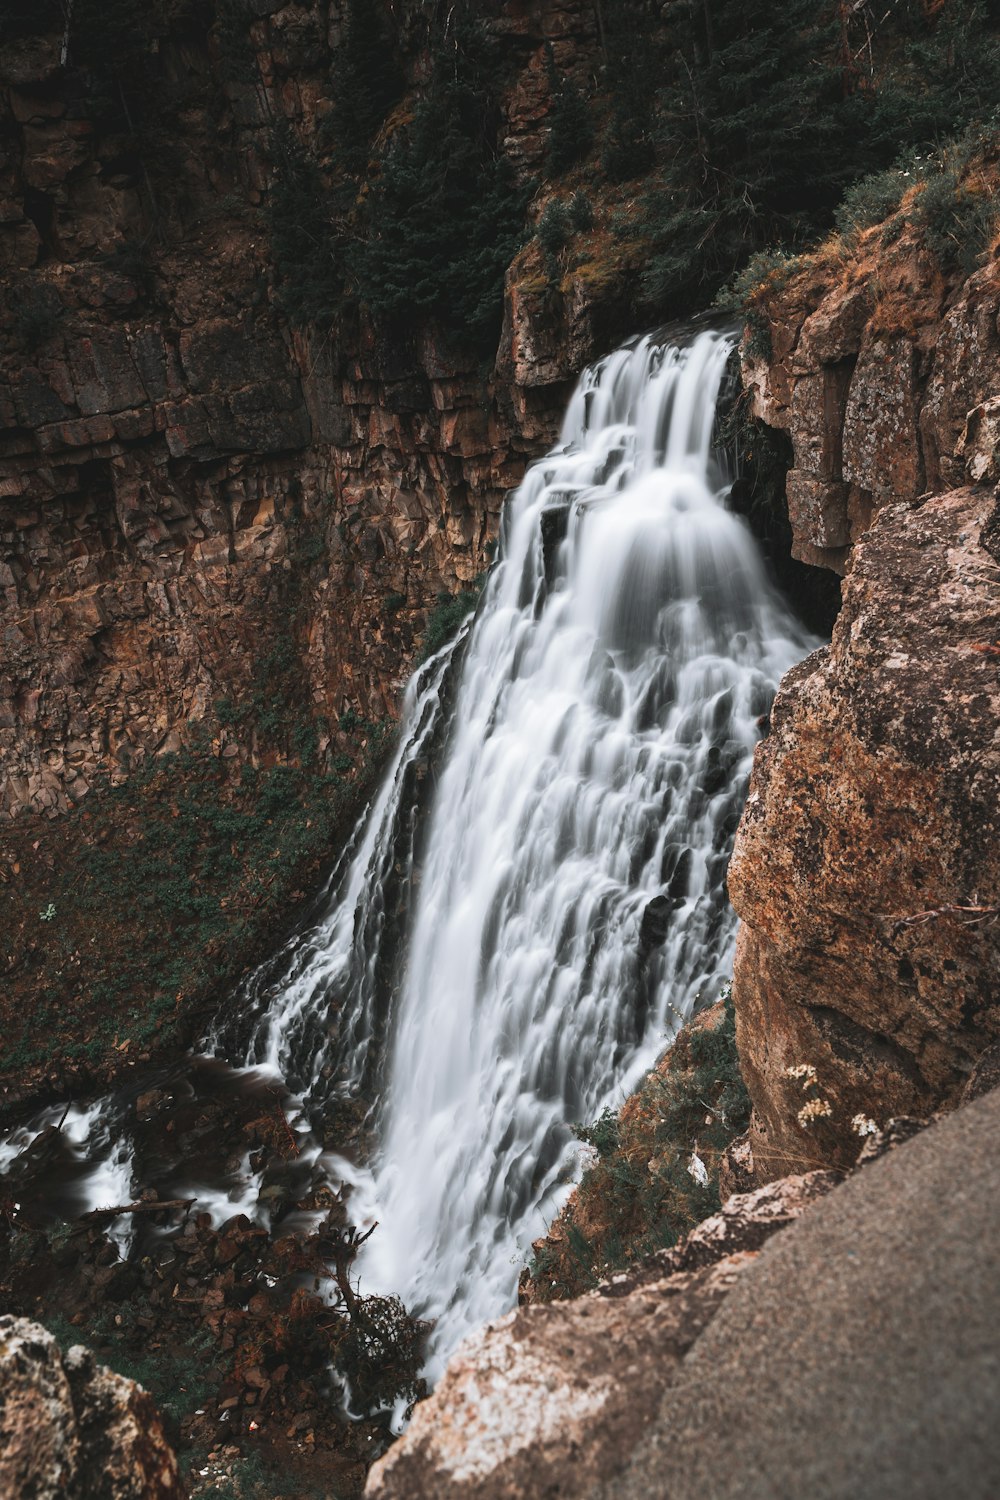 waterfalls near brown rocks